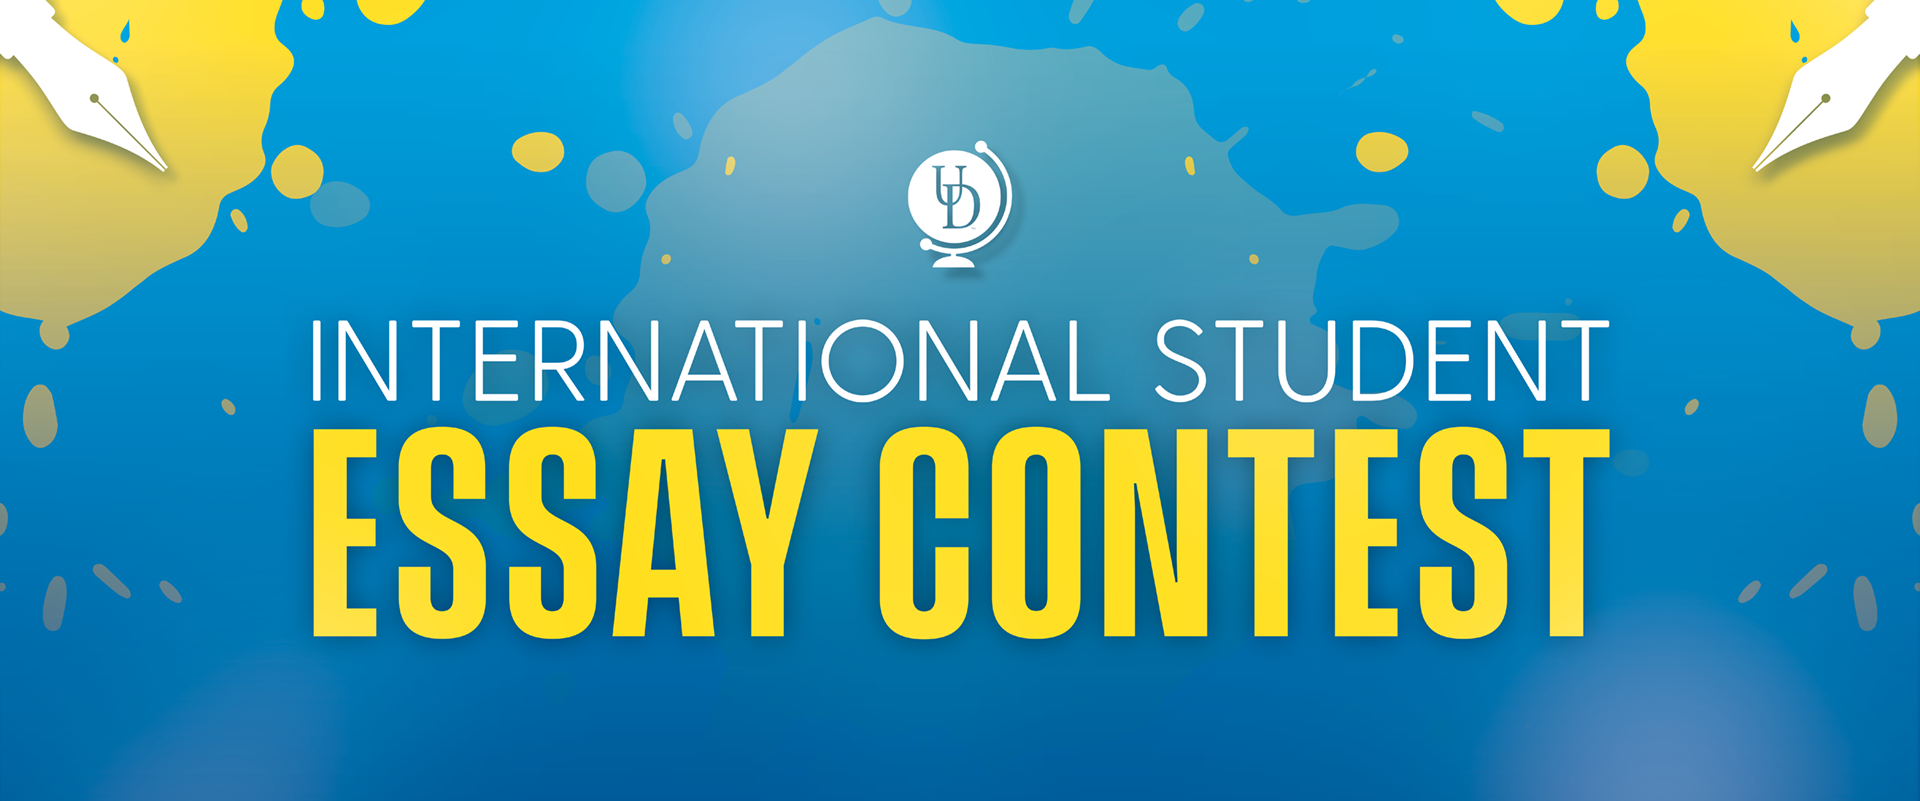 International Student Essay Contest